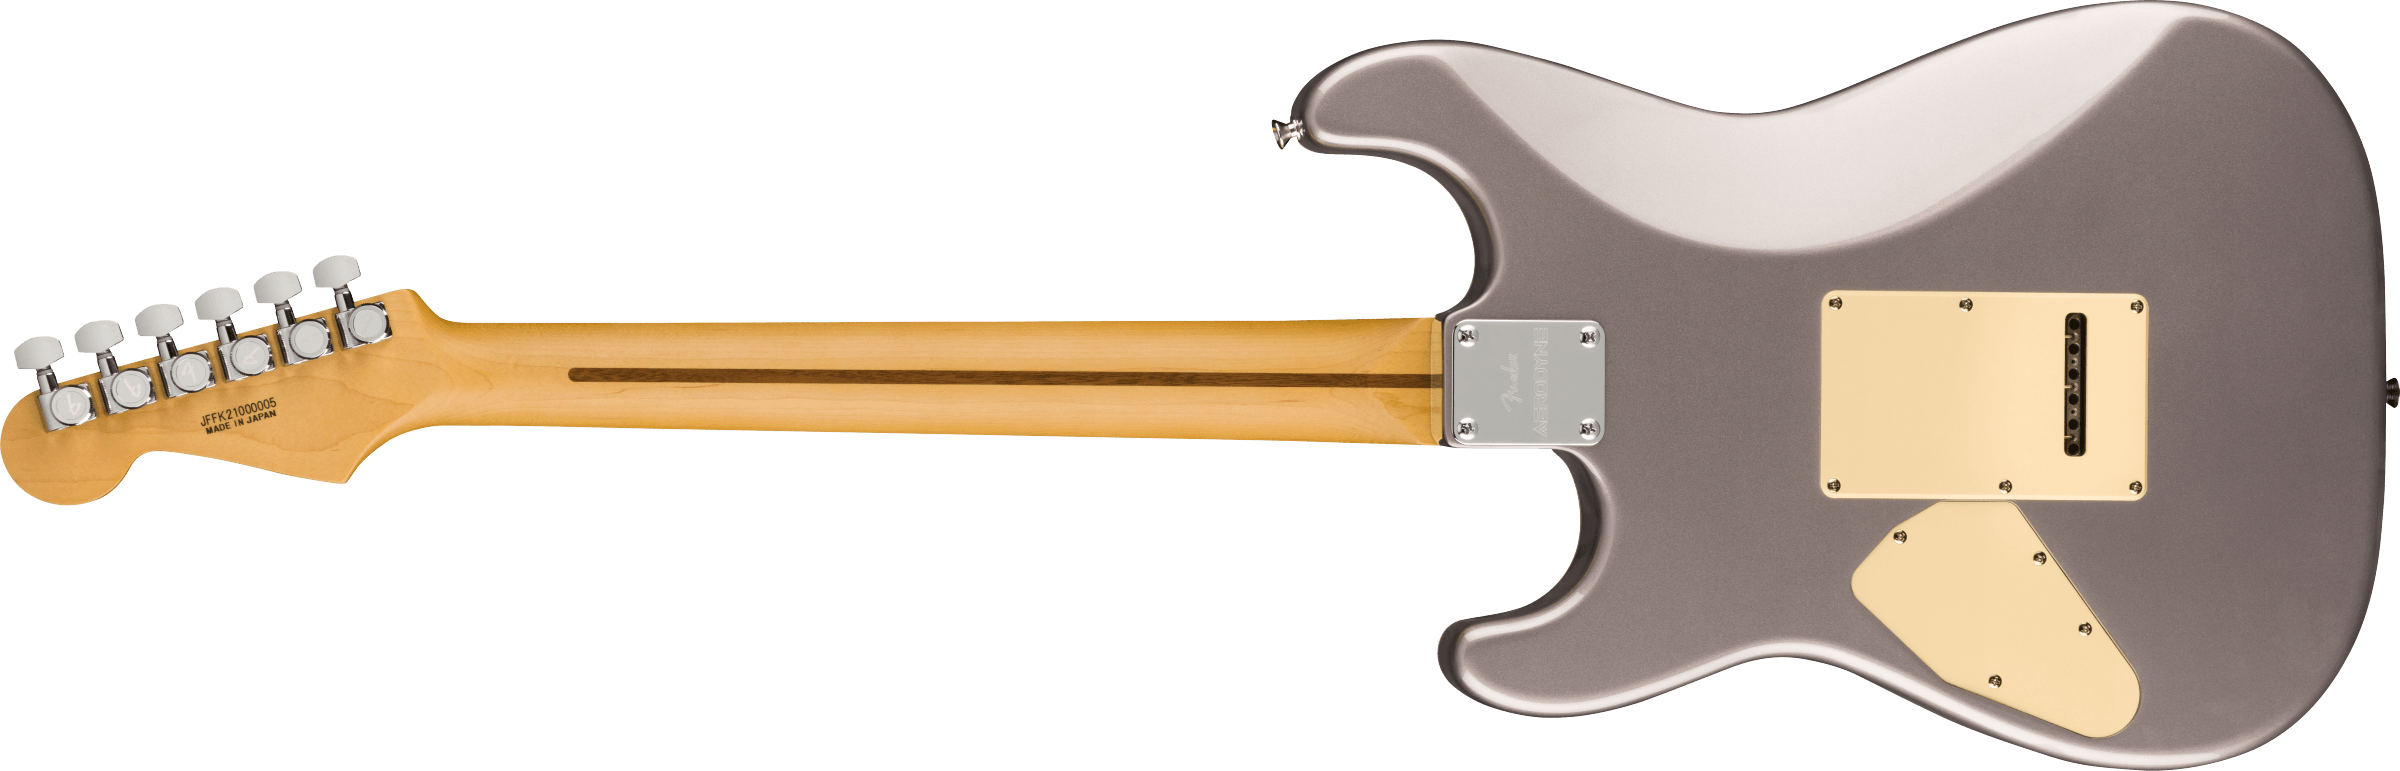 Fender Strat Aerodyne Special Jap Trem Hss Rw - Dolphin Gray Metallic - Guitare Électrique Forme Str - Variation 1